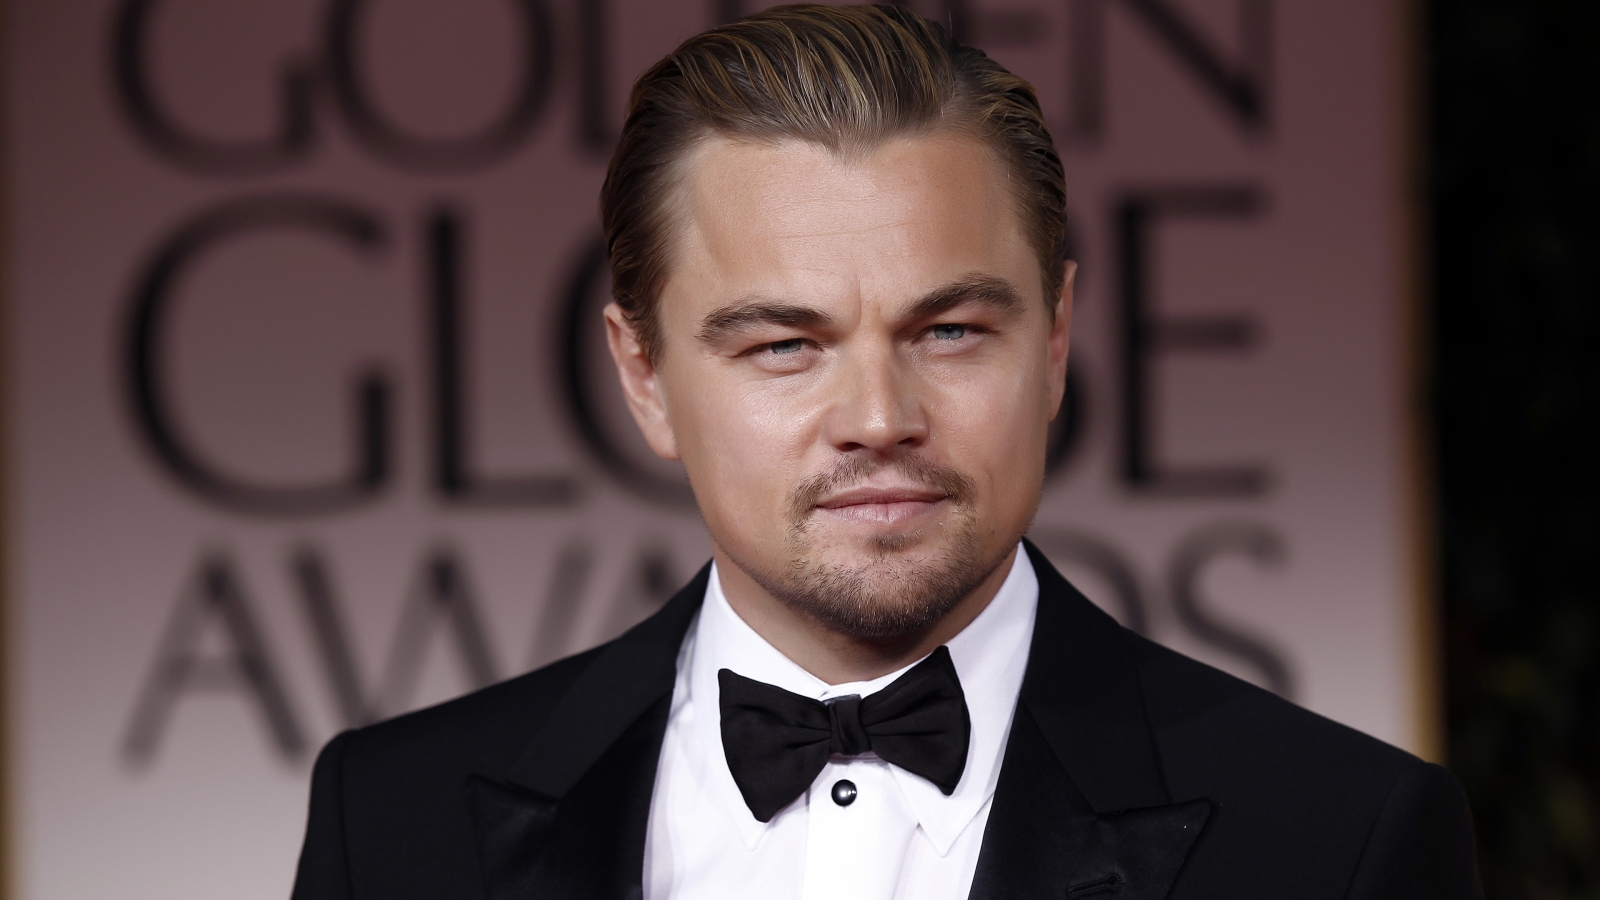 Leonardo DiCaprio in Tuxedo for 1600 x 900 HDTV resolution